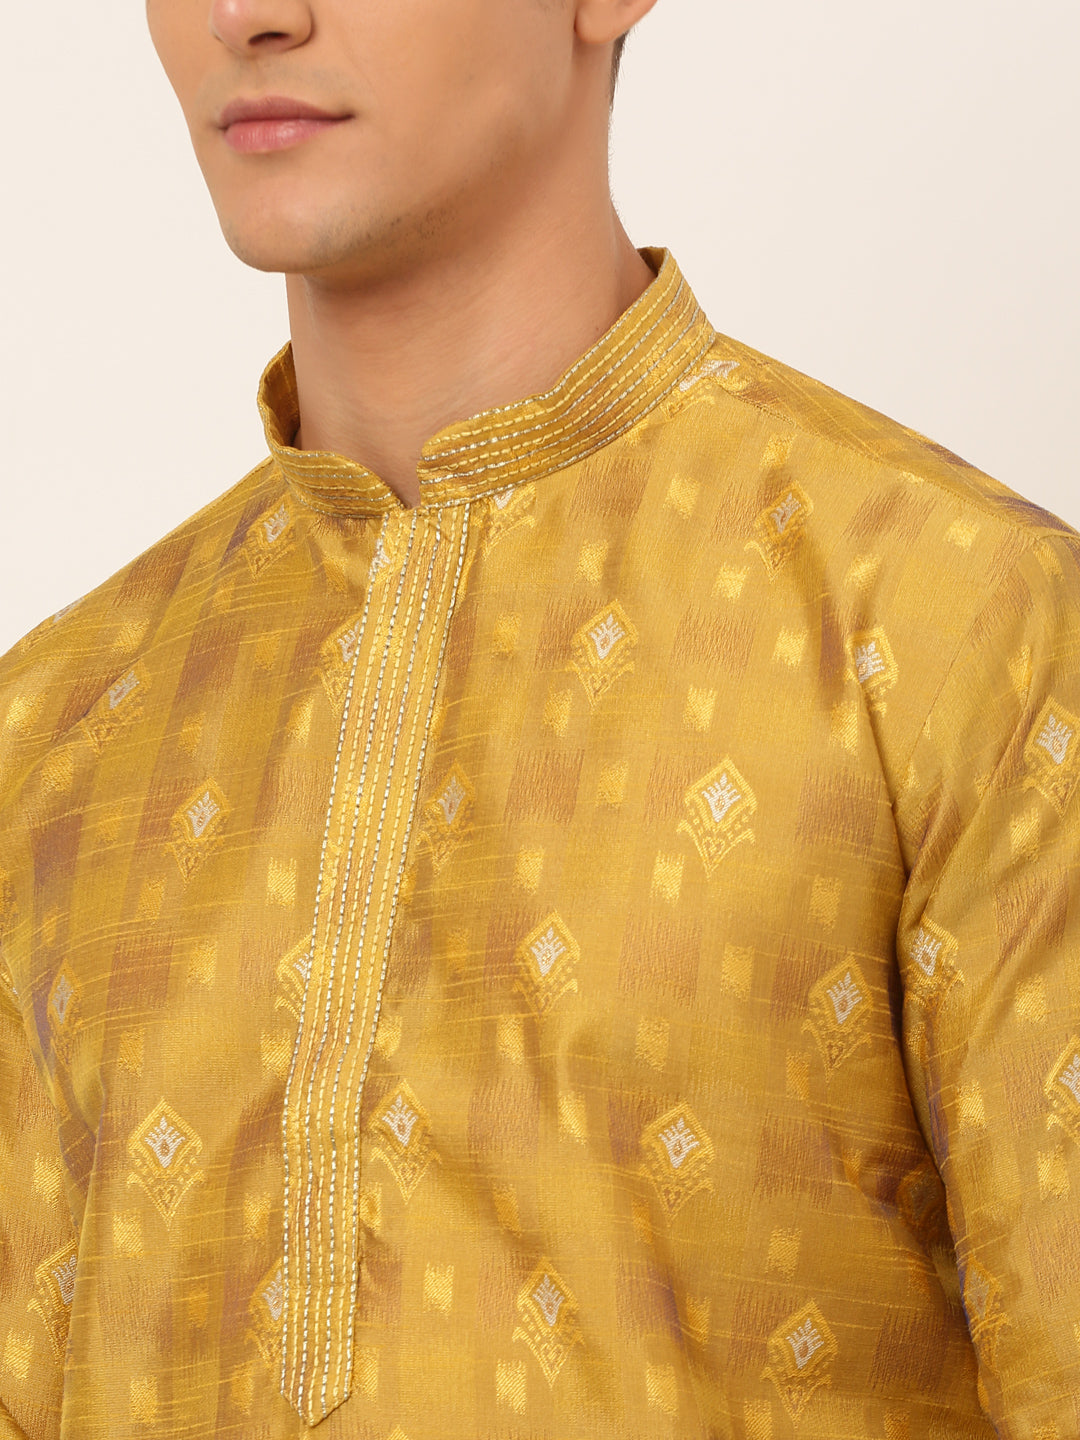 Jompers Men's Mustard Collar Embroidered Woven Design Kurta Pajama